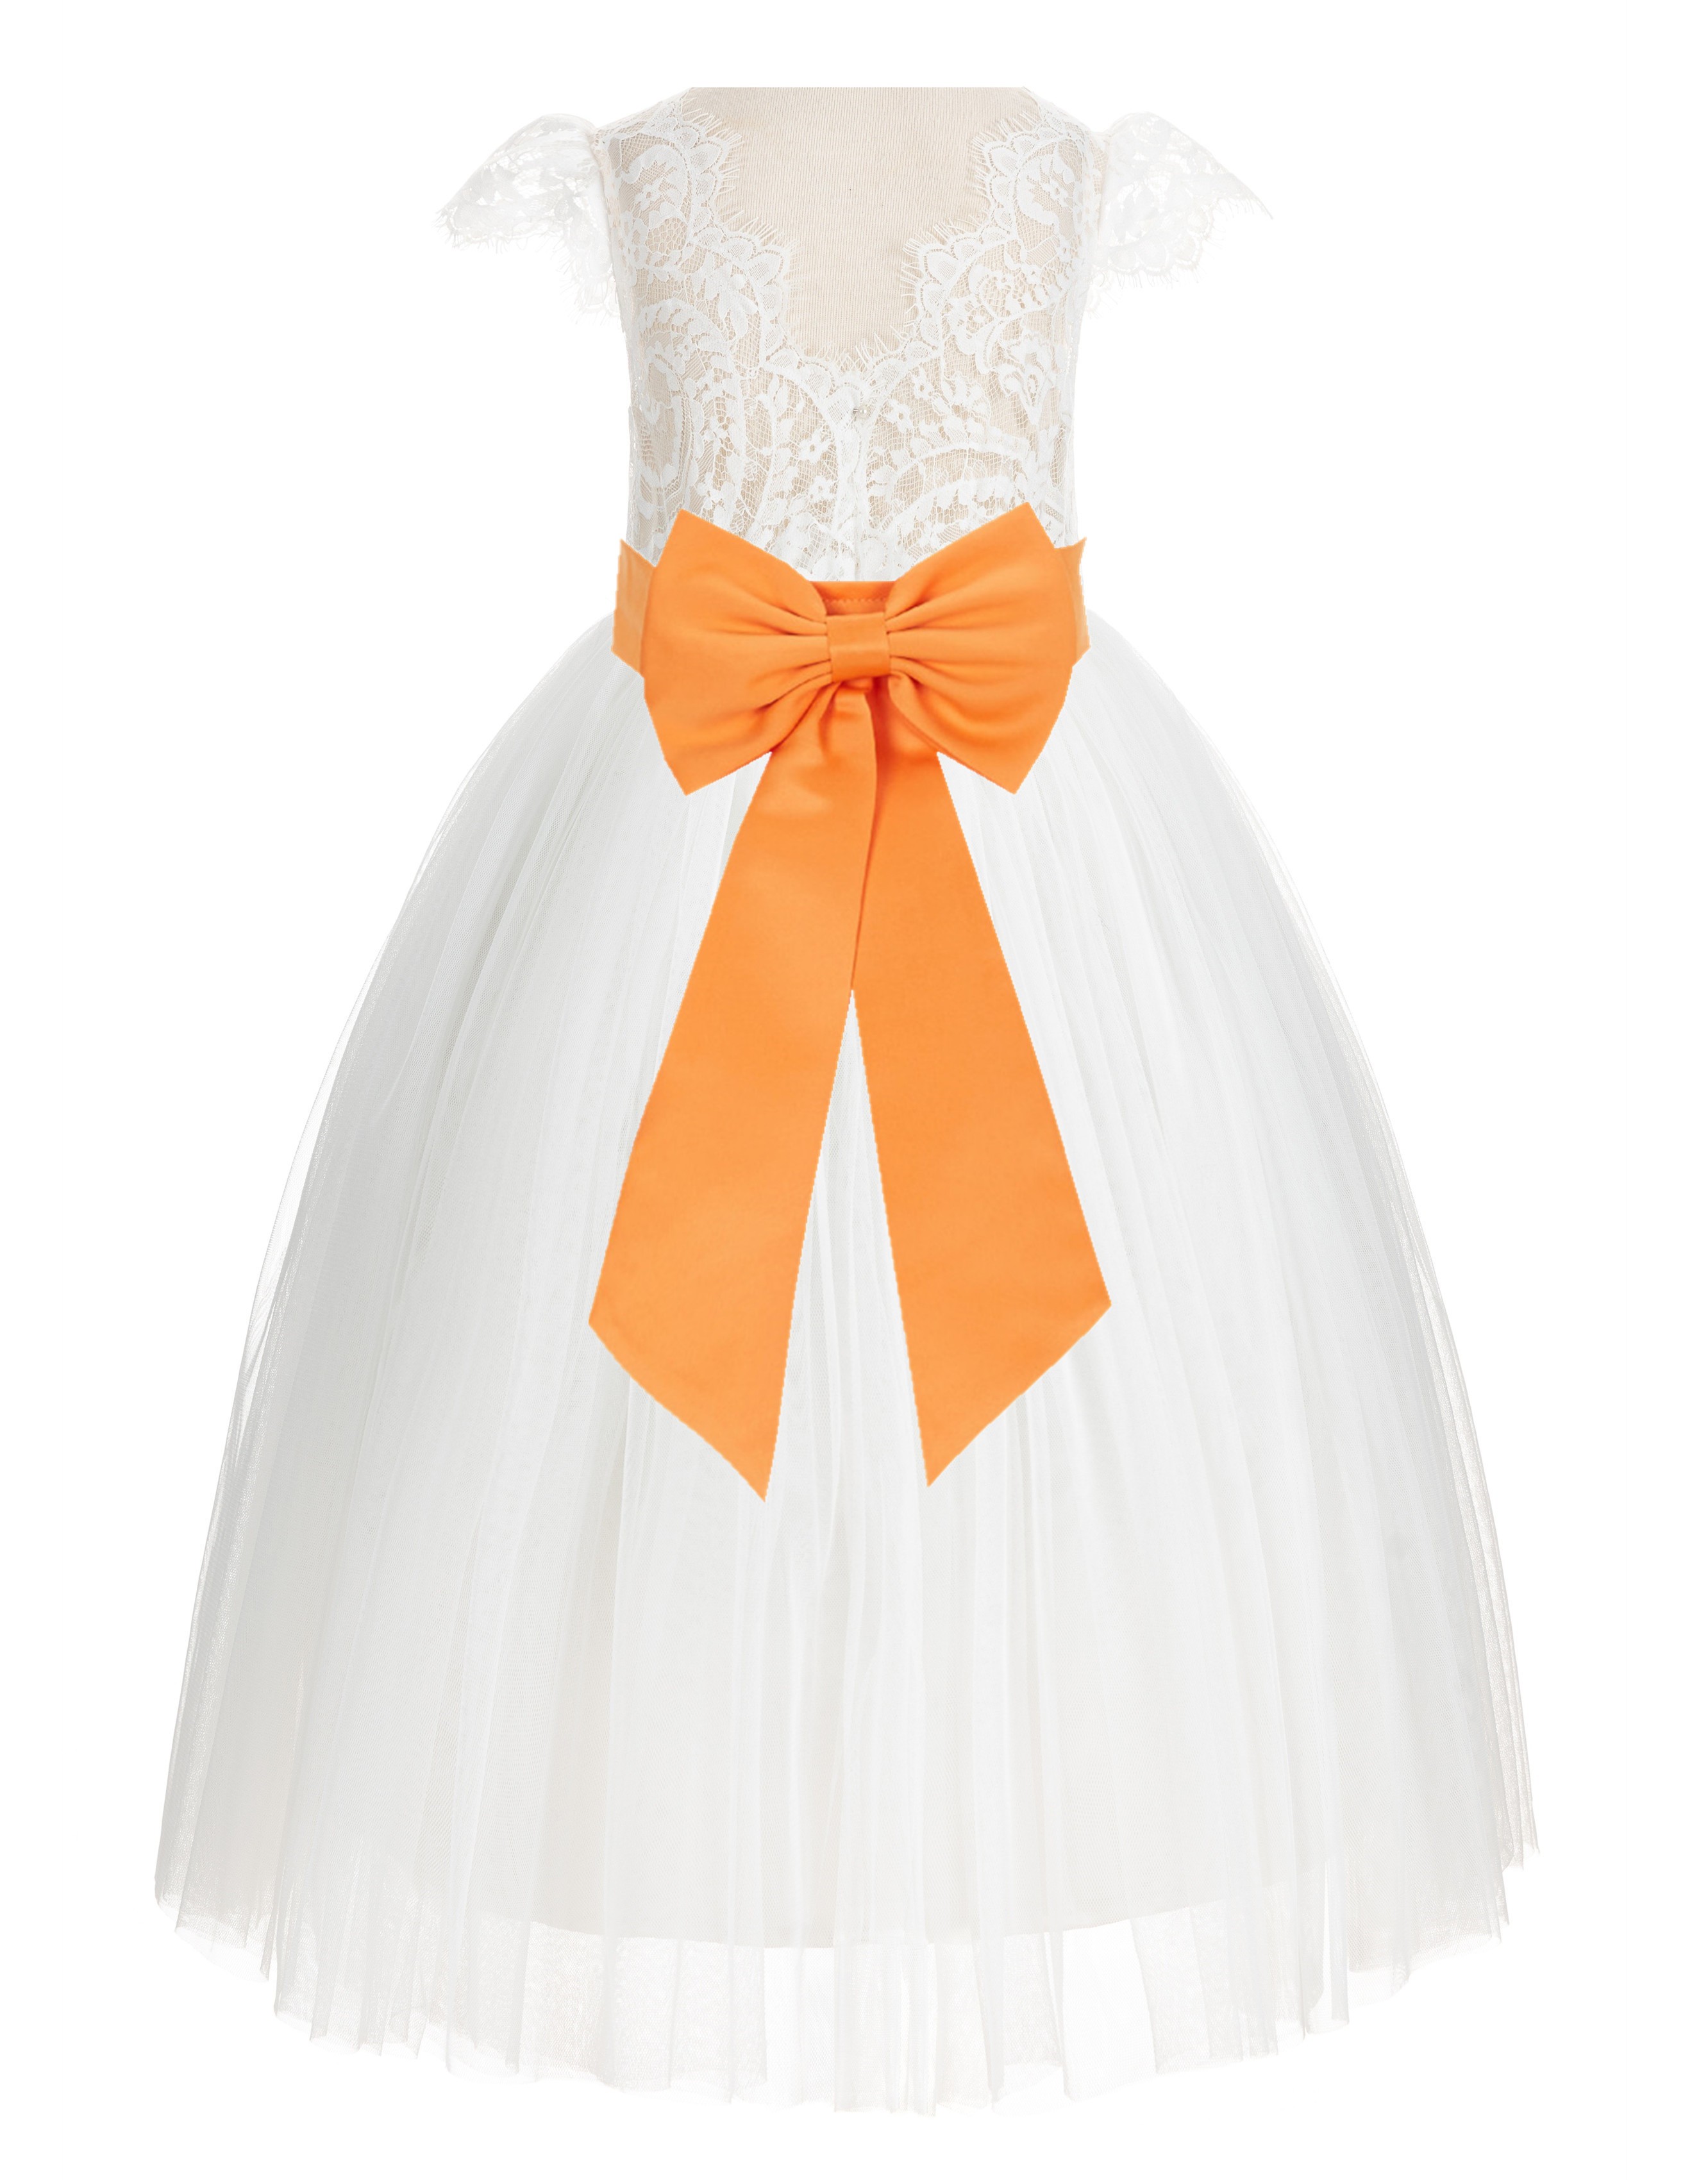 Ivory / Orange Cap Sleeves Lace Flower Girl Dress V-Back Lace Dress 622T